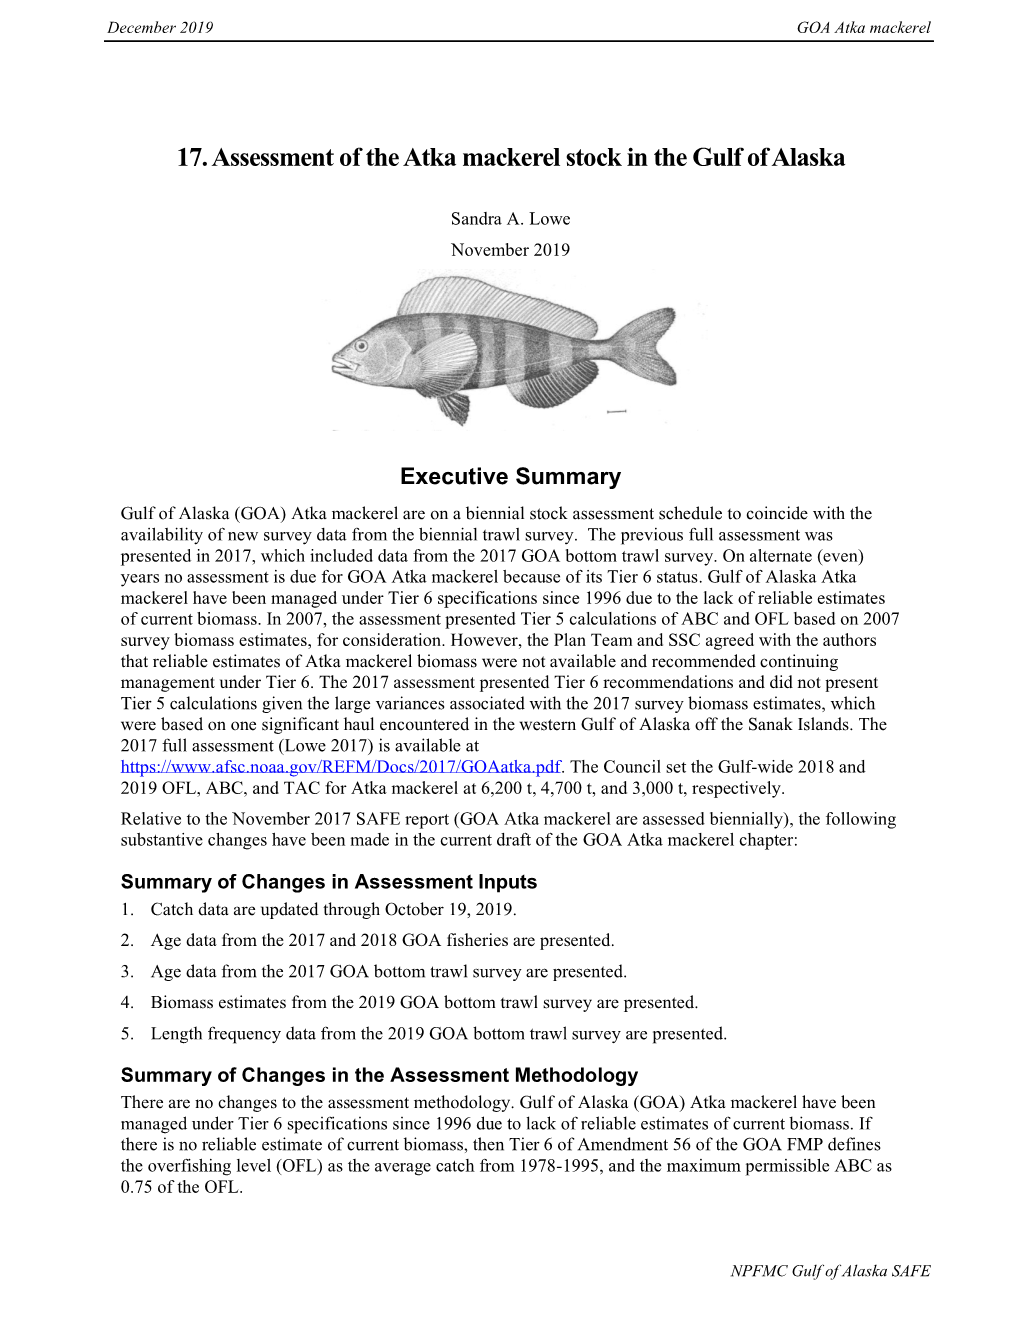 Gulf of Alaska Atka Mackerel Stock Assessment